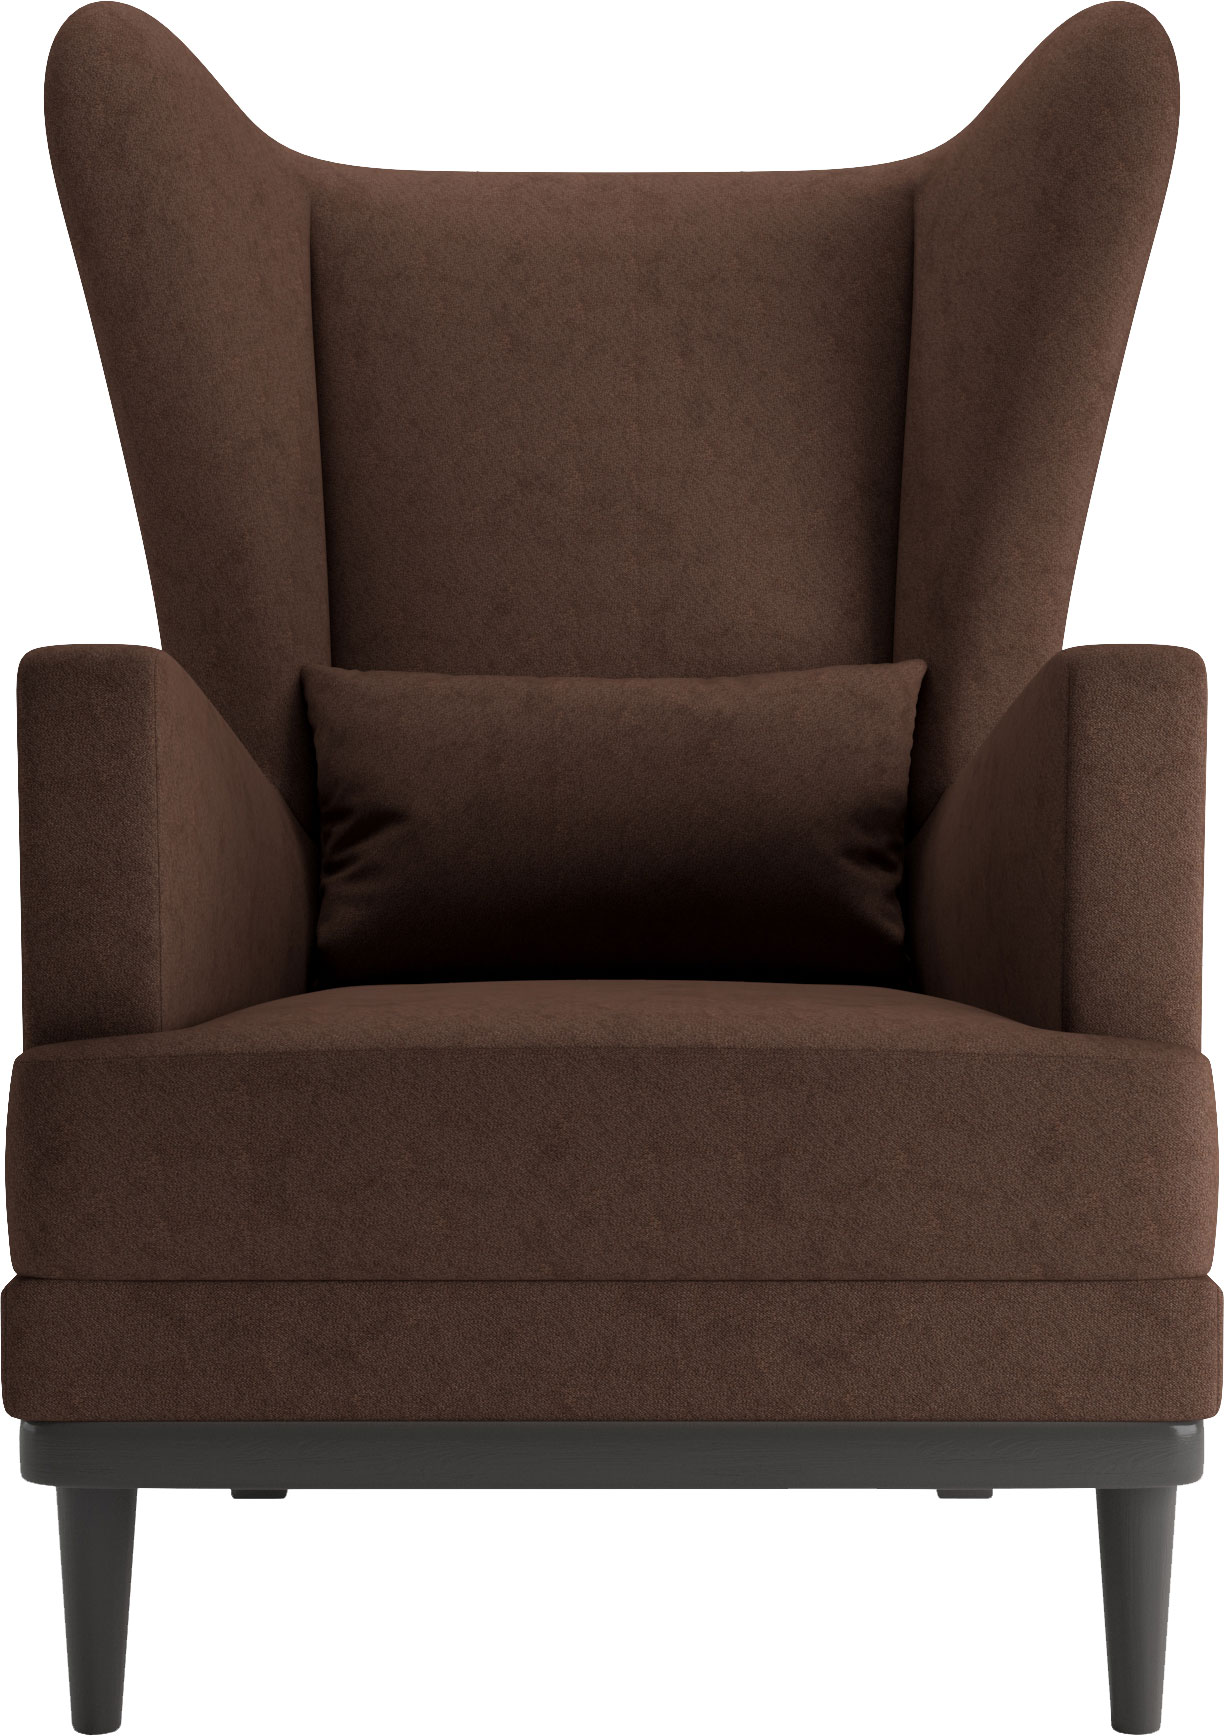 Кресло Оскар кресло А4 темно-коричневое